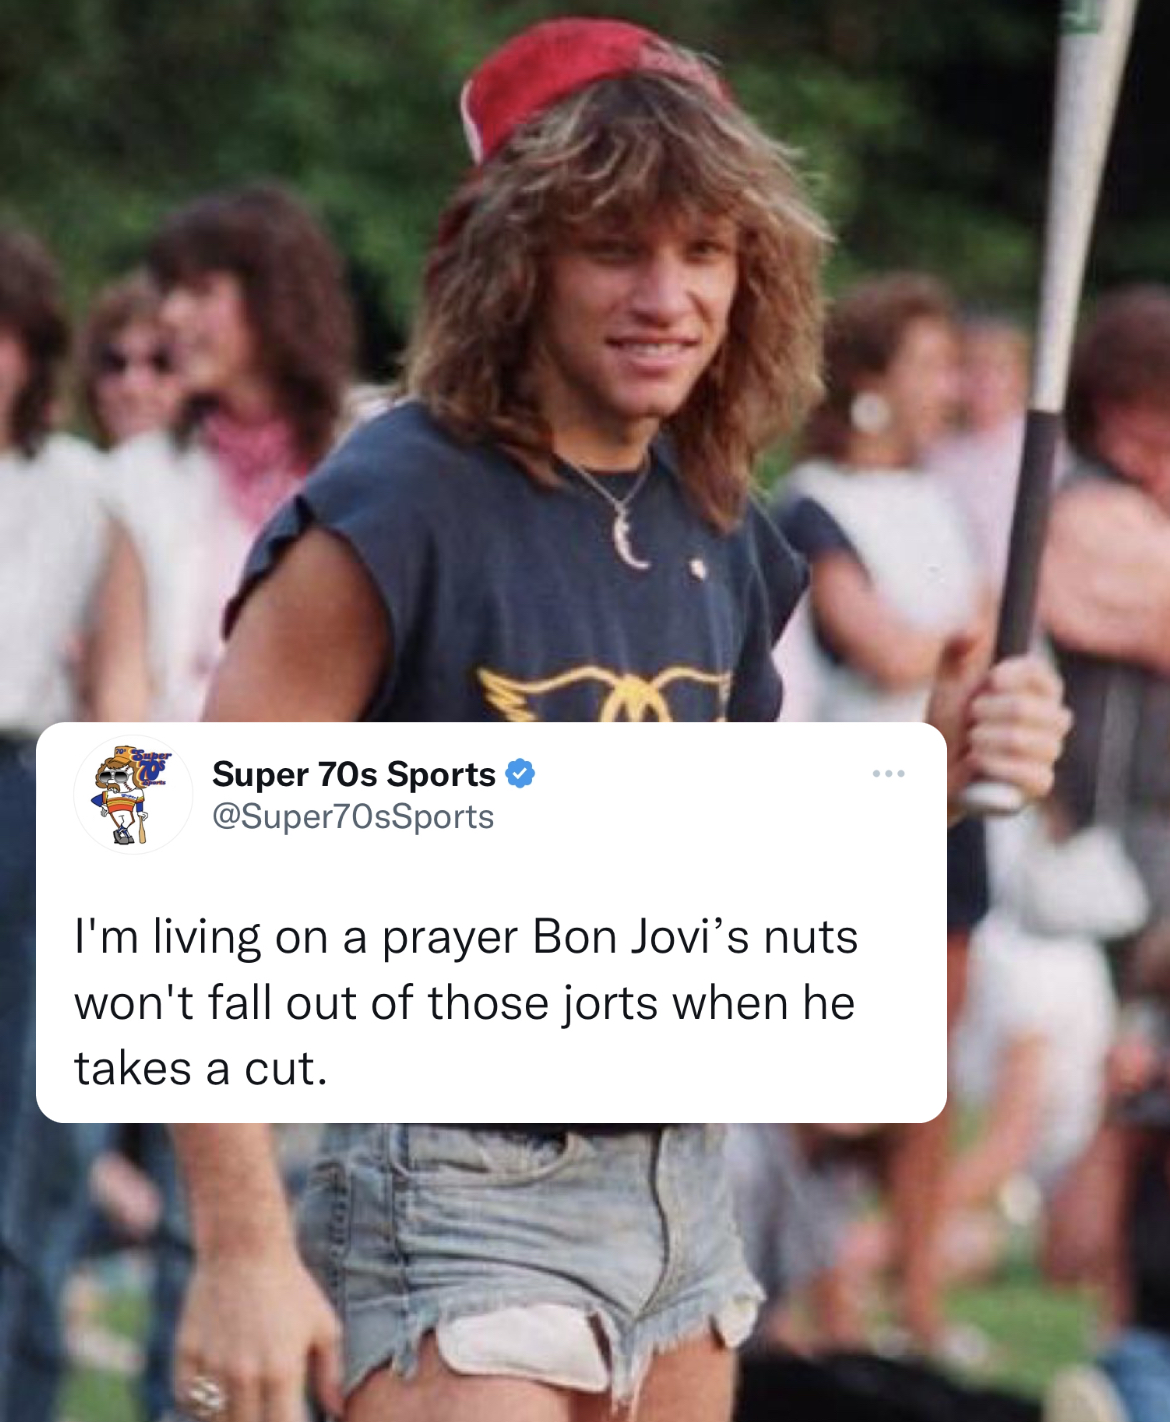 tweets roasting celebs - jon bon jovi short shorts - Super 70s Sports I'm living on a prayer Bon Jovi's nuts won't fall out of those jorts when he takes a cut. R